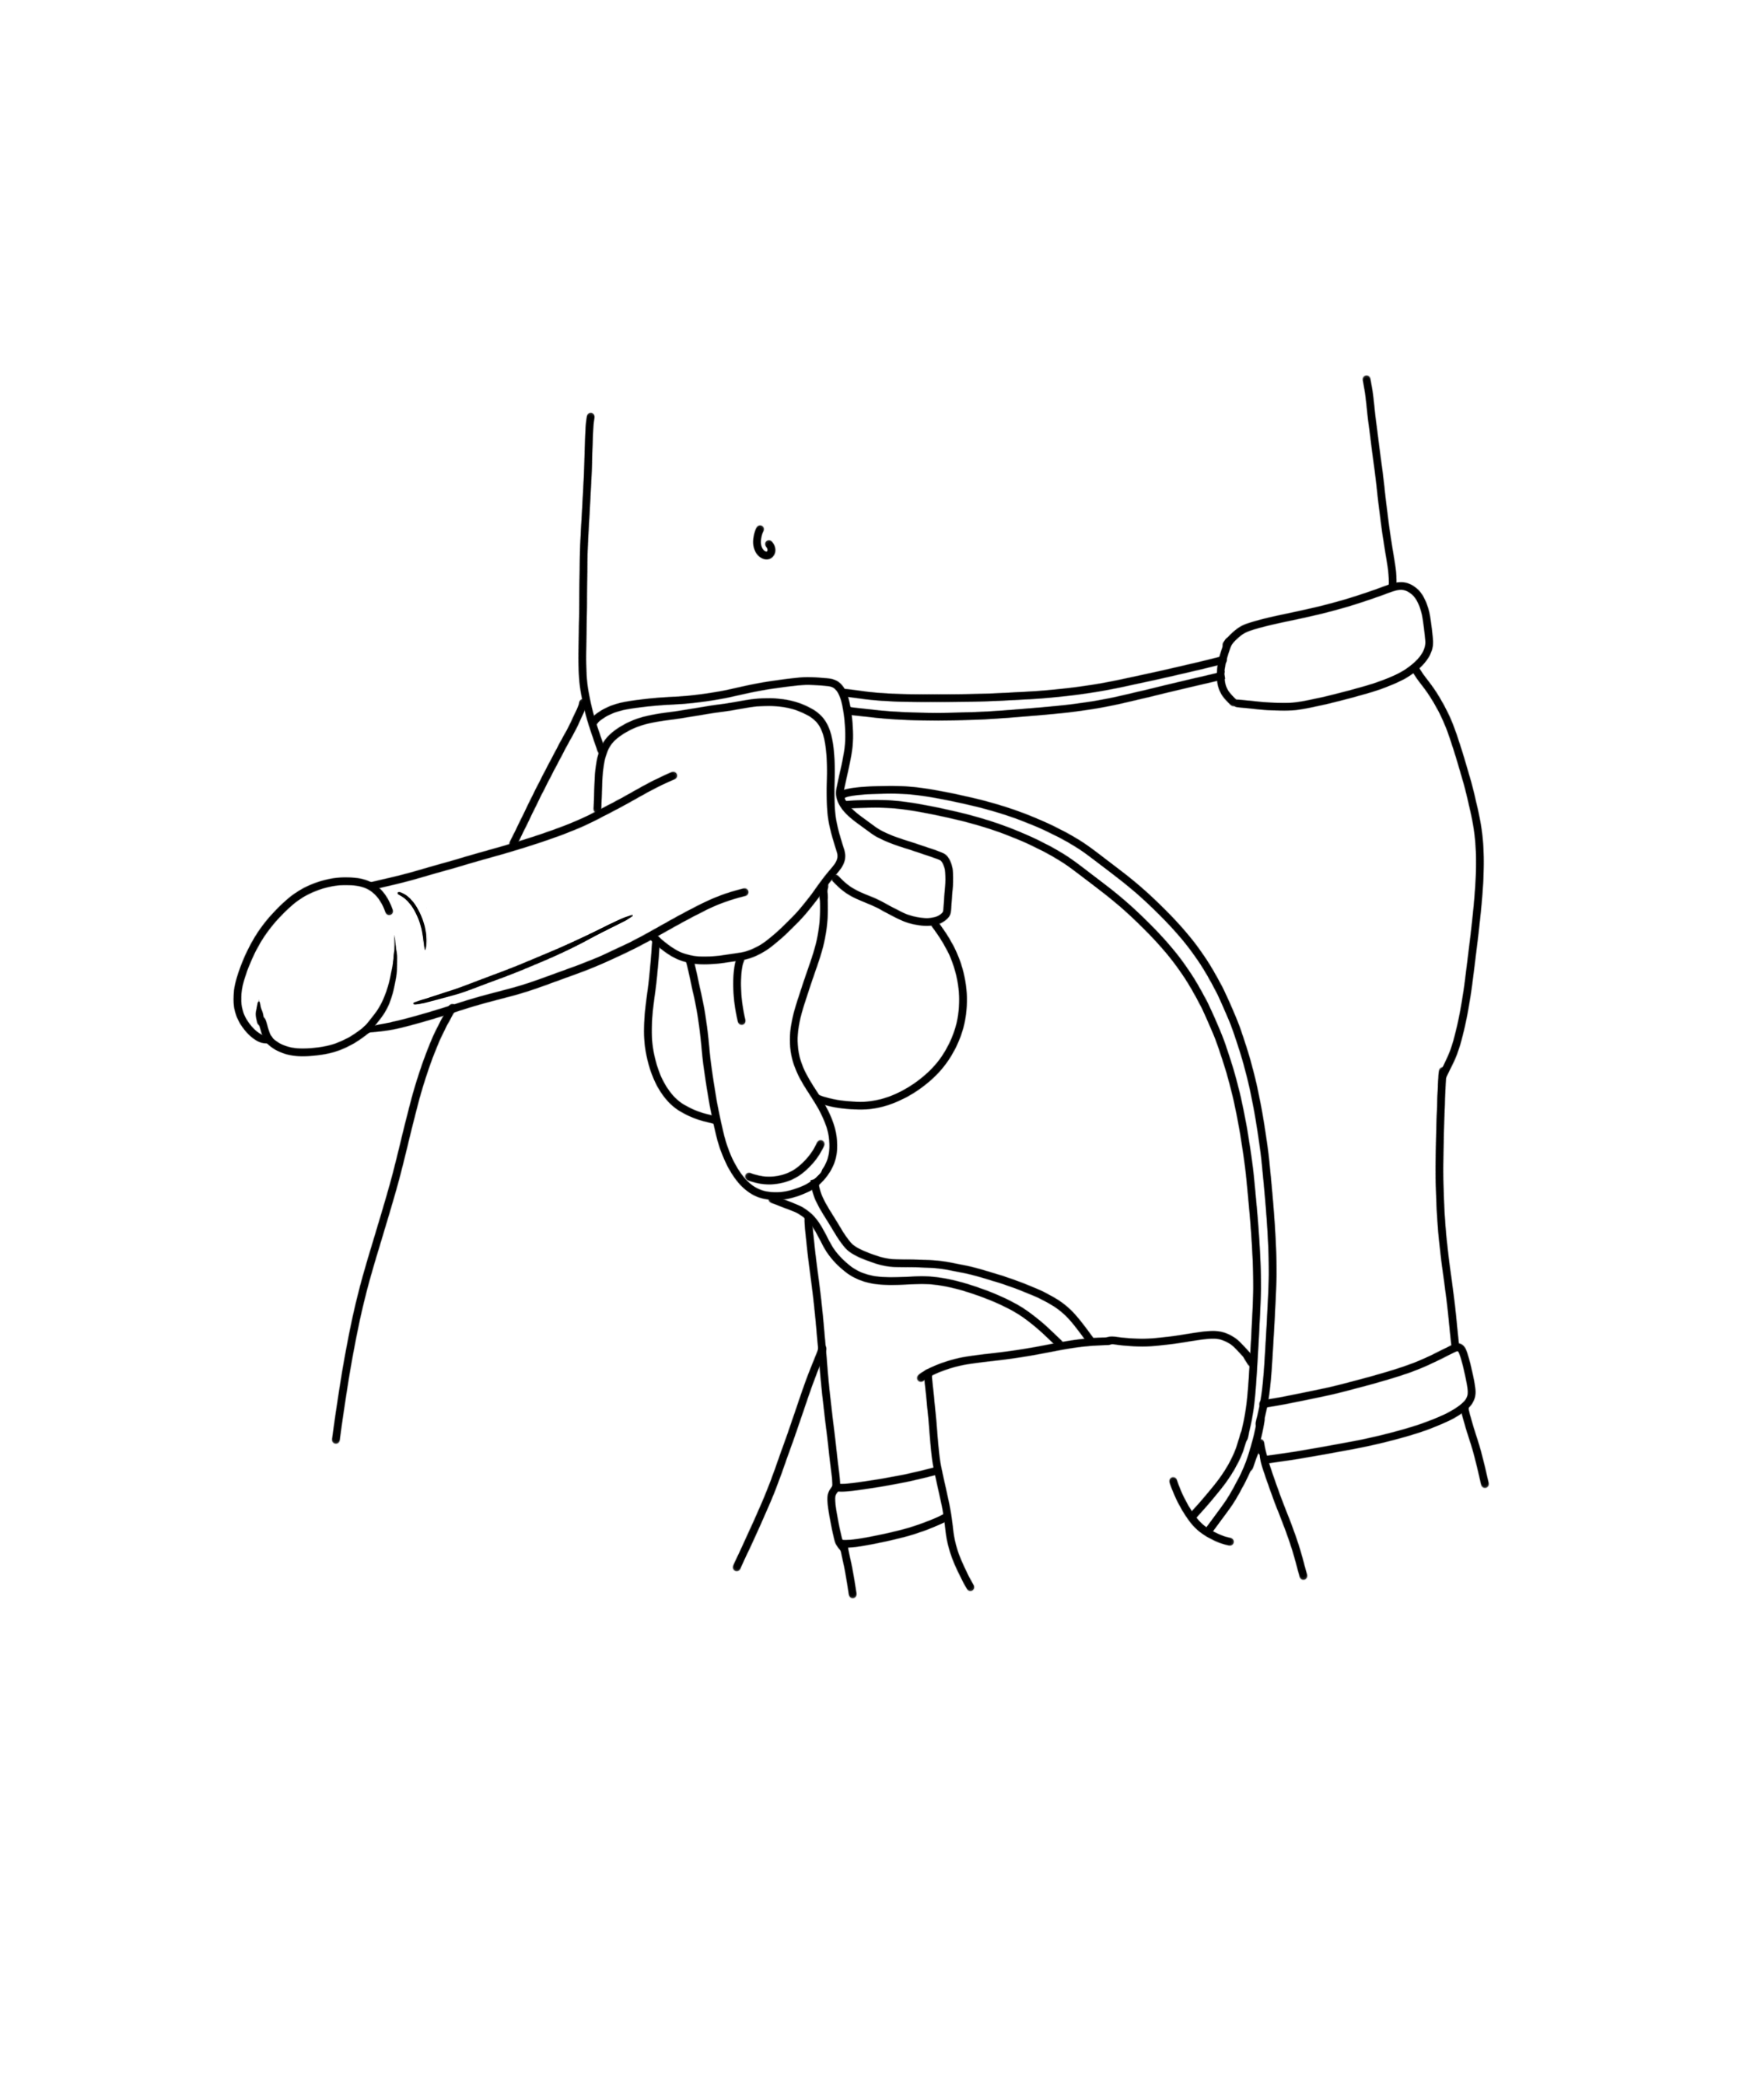 RX Sleeve urination system